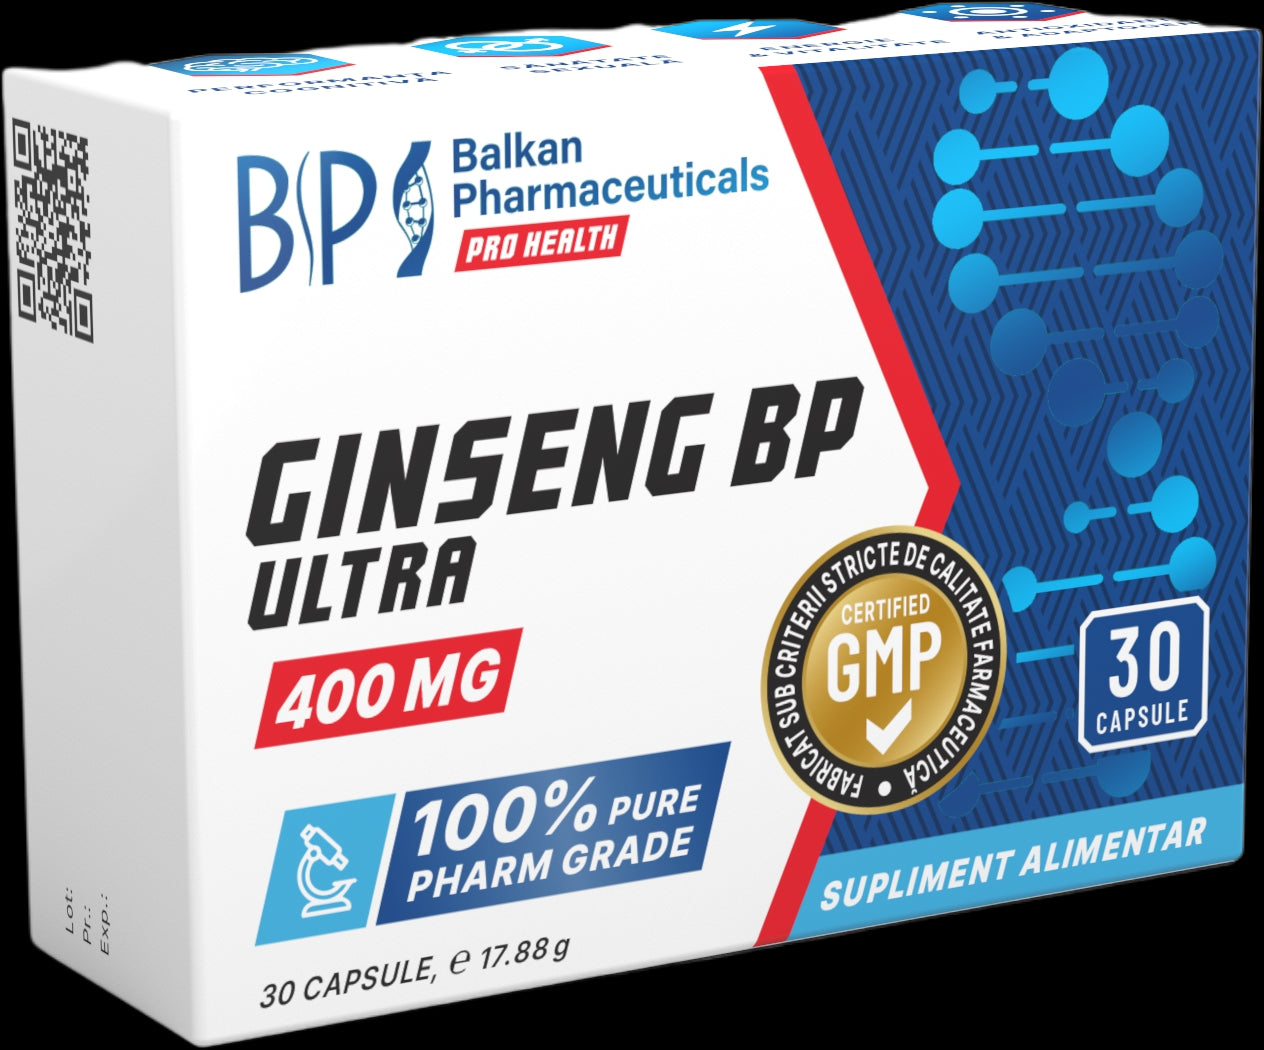 Ginseng BP Ultra 400 mg - BadiZdrav.BG